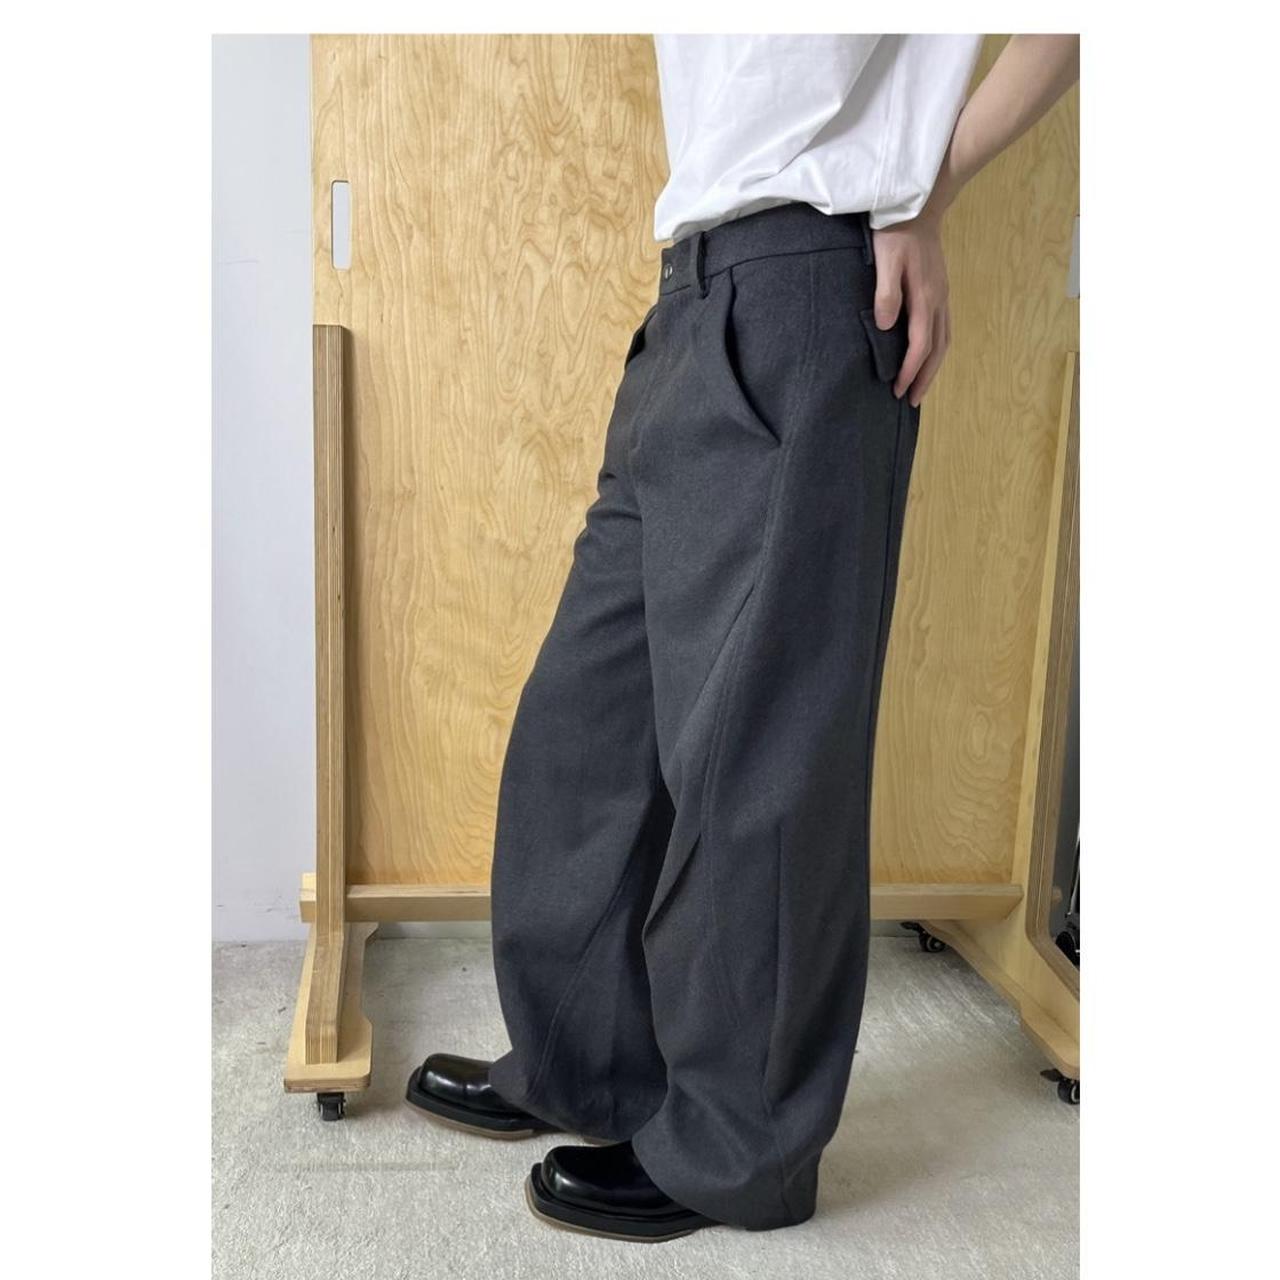 Grey pleated wide pants •Brand new •Essential Item - Depop